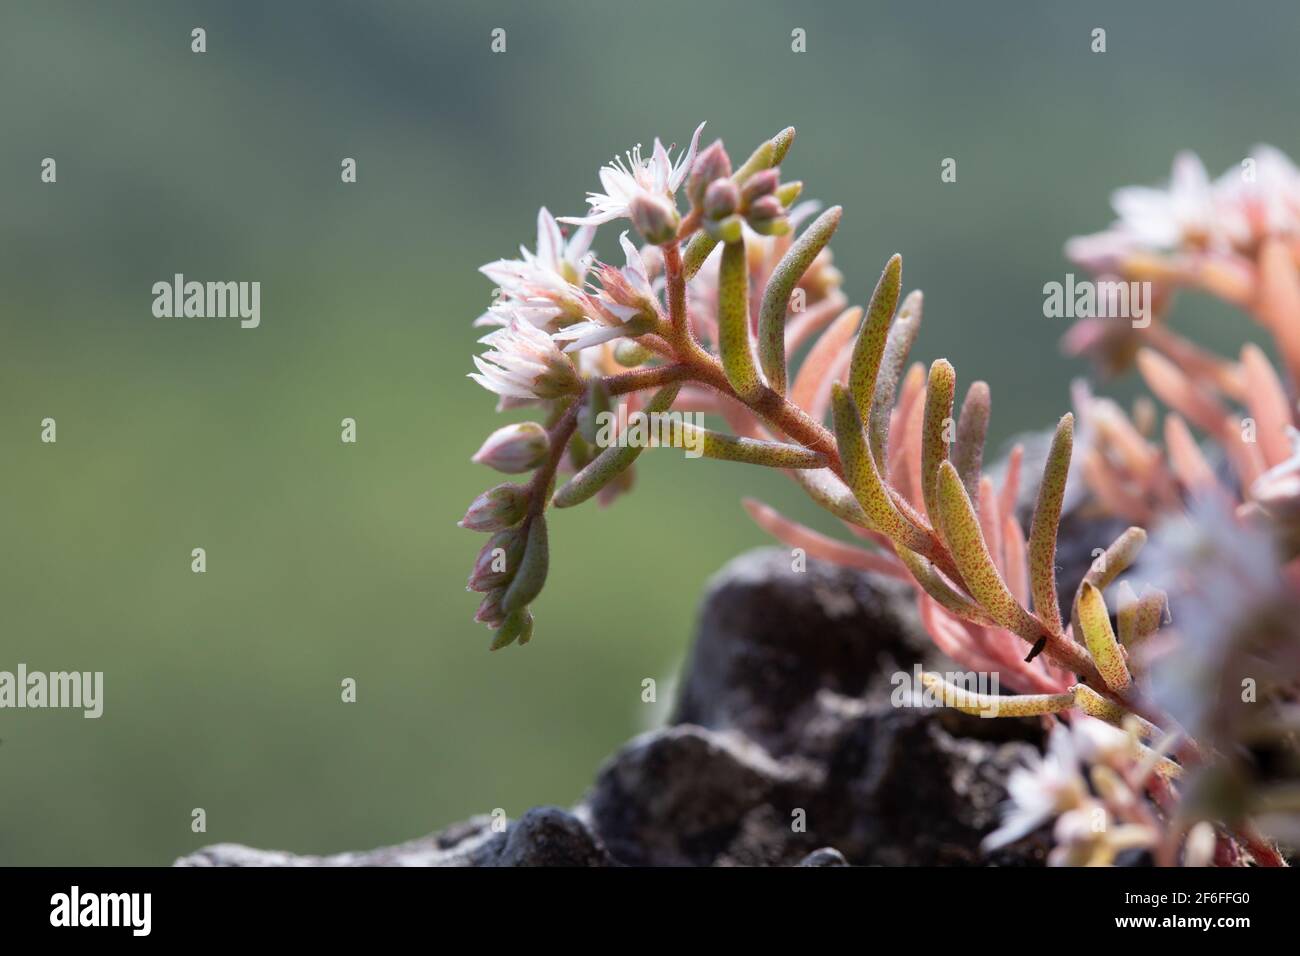 Flowering white sedum plant in Carpathian mountain region. Stonecrop plant on blurred background. Stock Photo